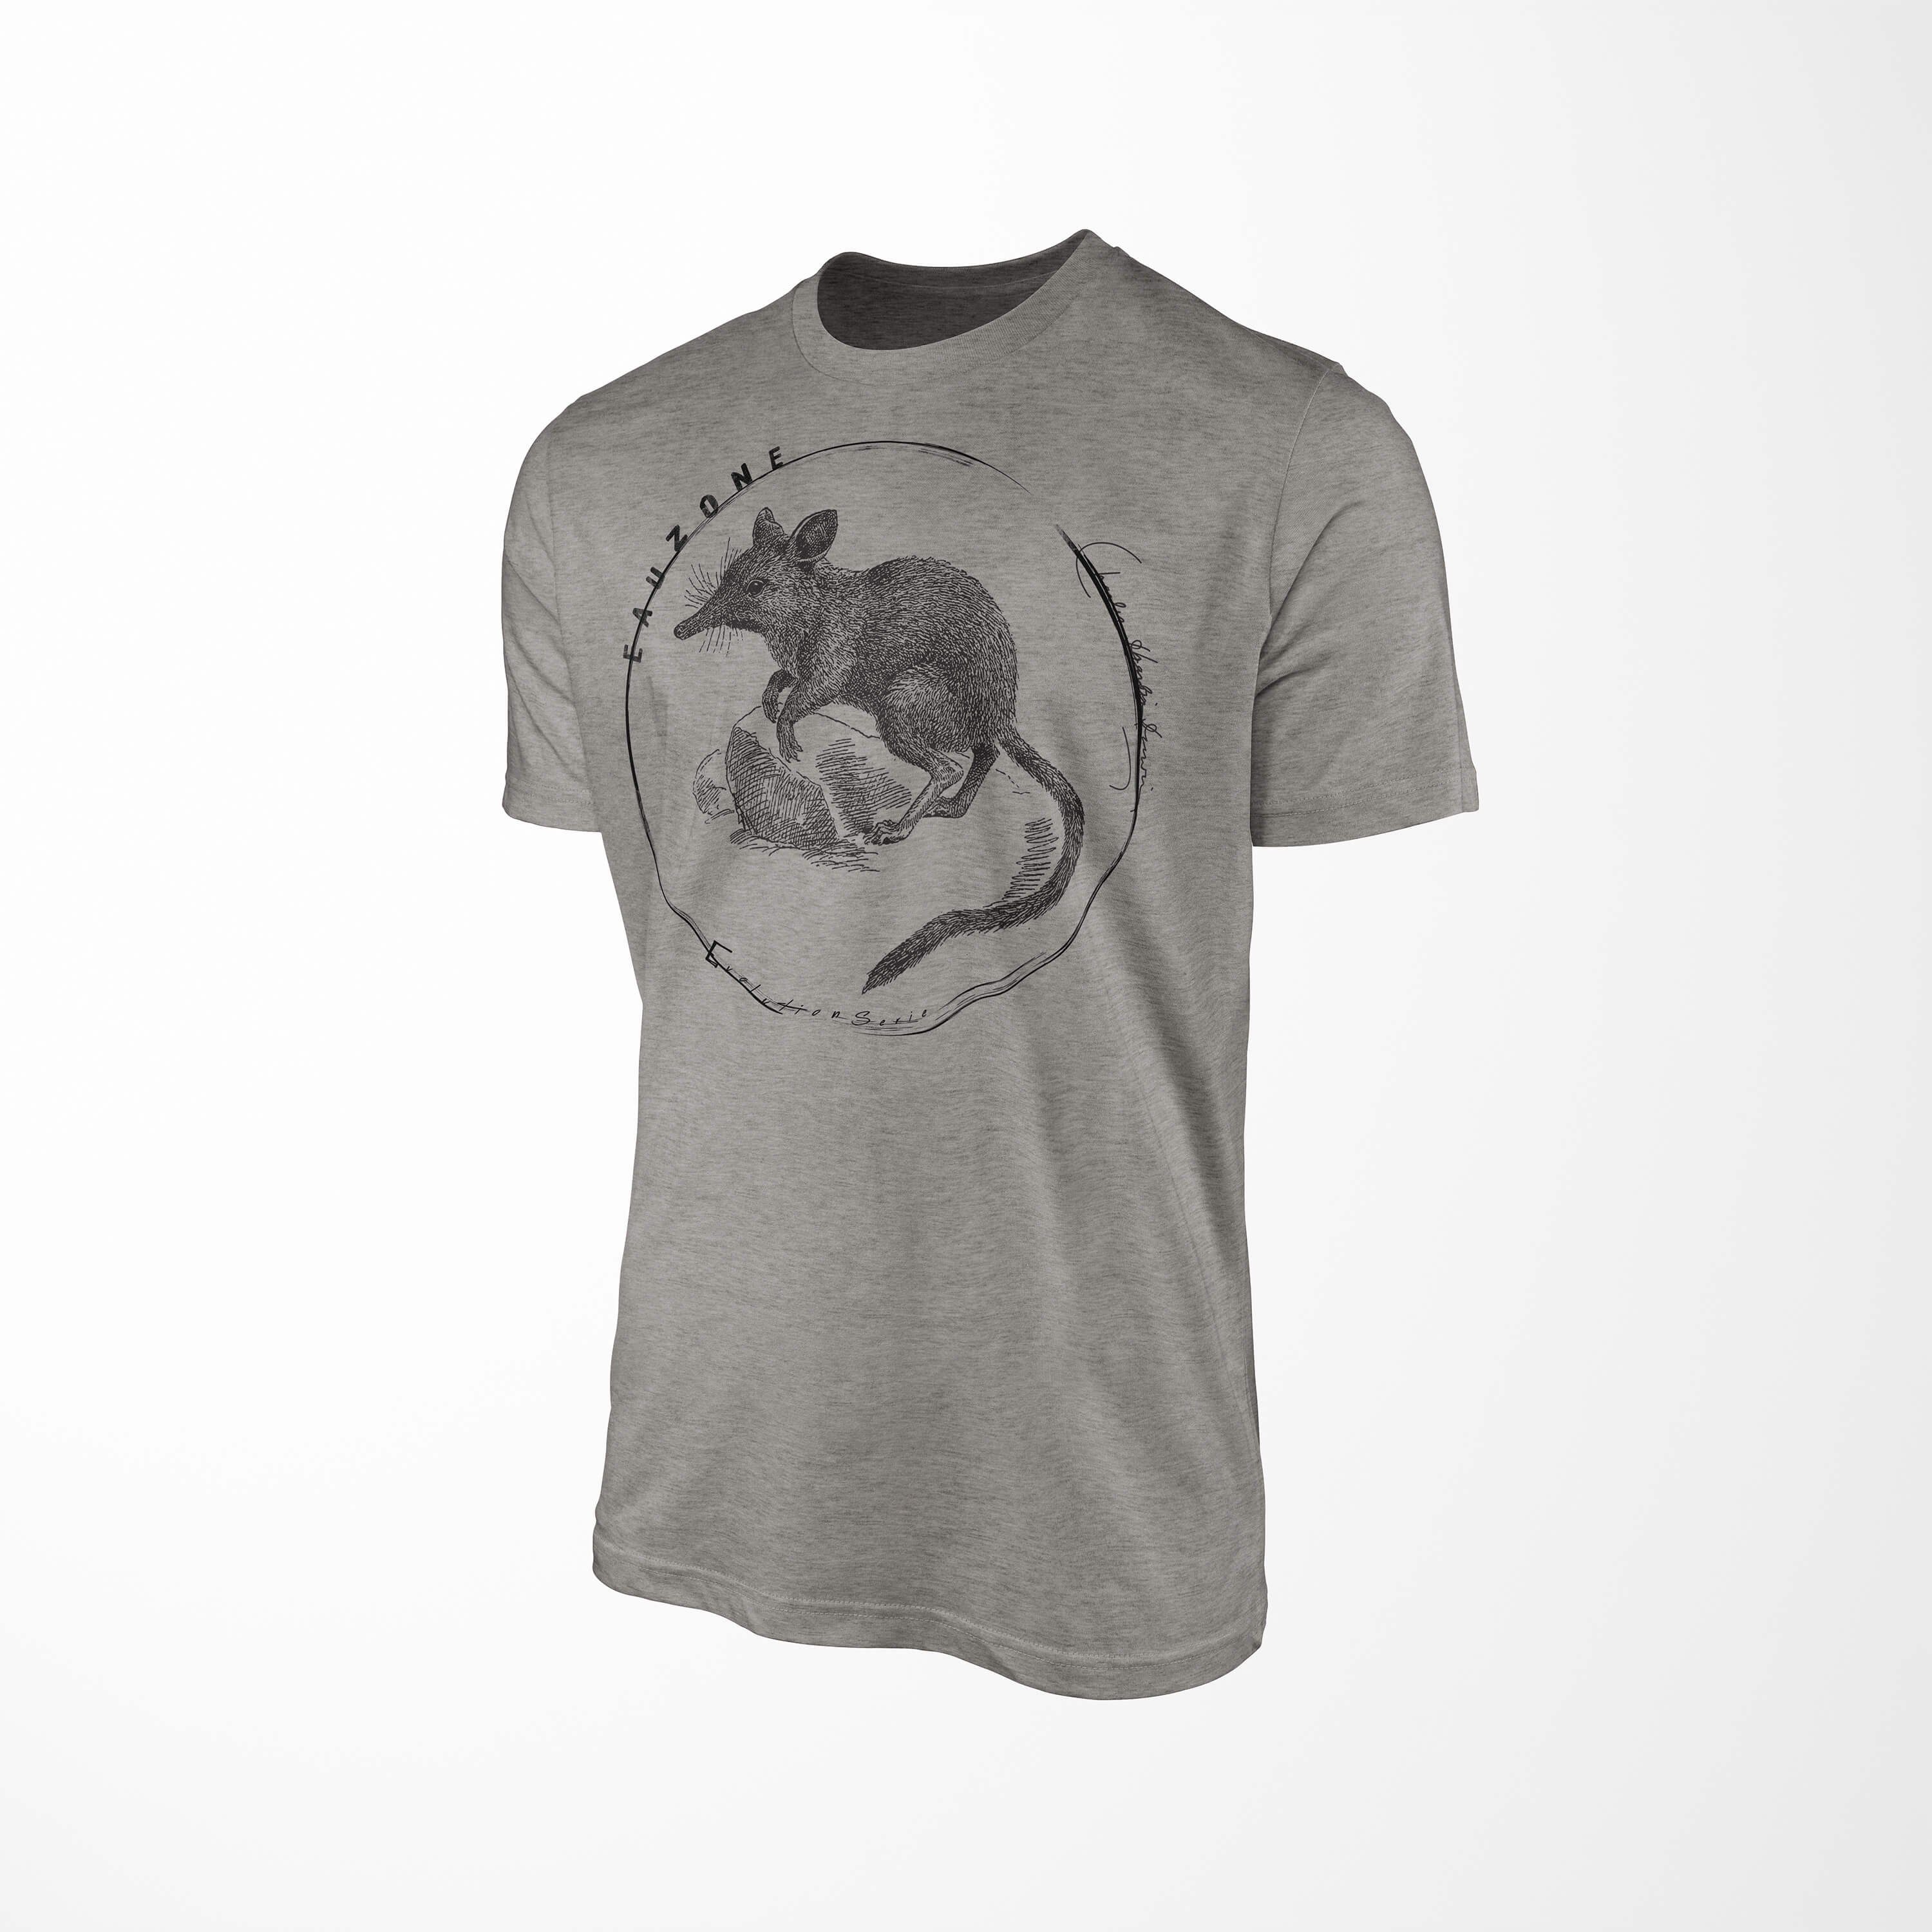 T-Shirt Evolution Ash Sinus Herren Springspitzmaus T-Shirt Art